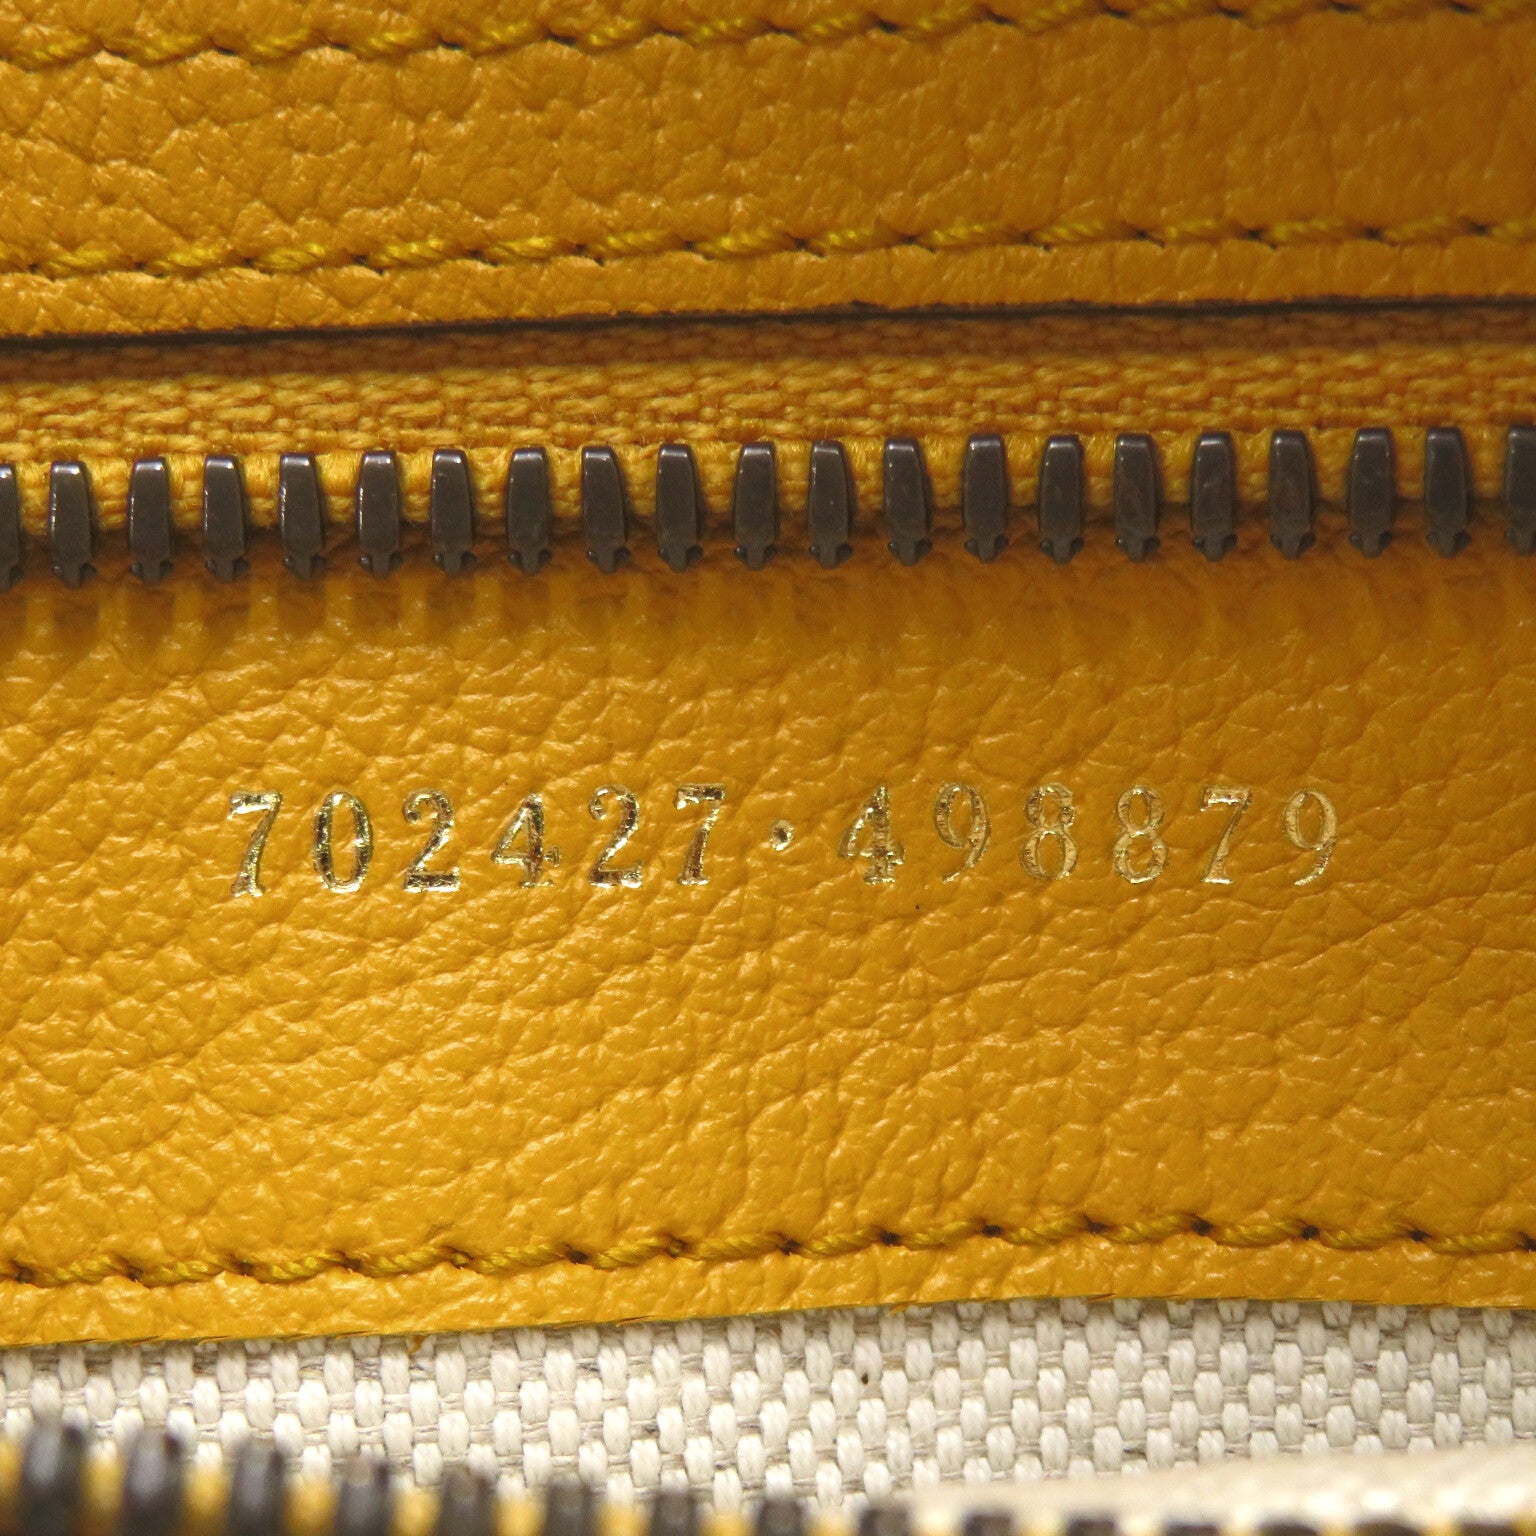 Gucci  adidas Shoulder Bag Shoulder Bag Leather Pig S Mens Brown / Yellow 702427